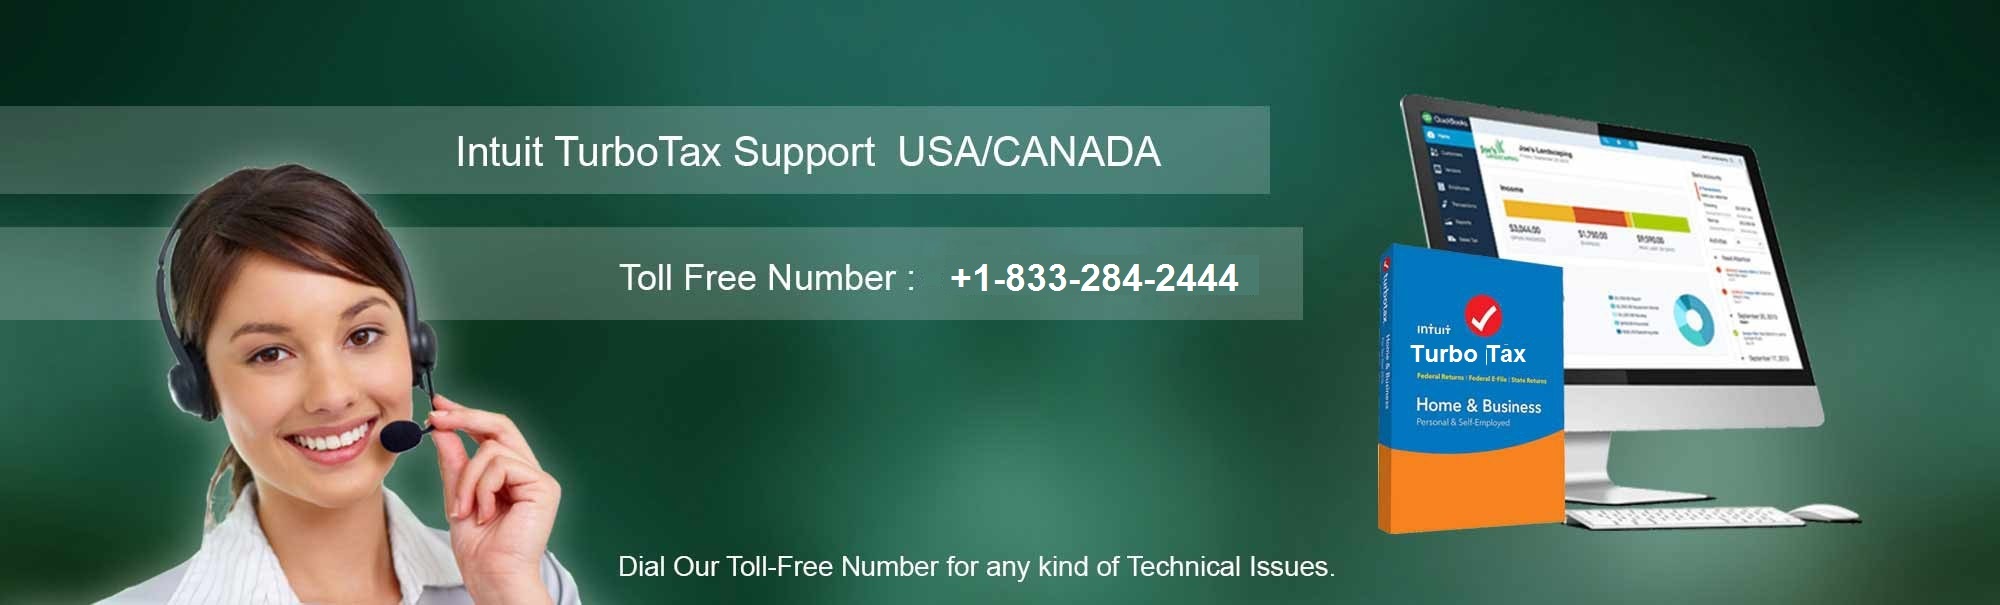 Turbo Tax Service 1-833-284-2444 Number USA